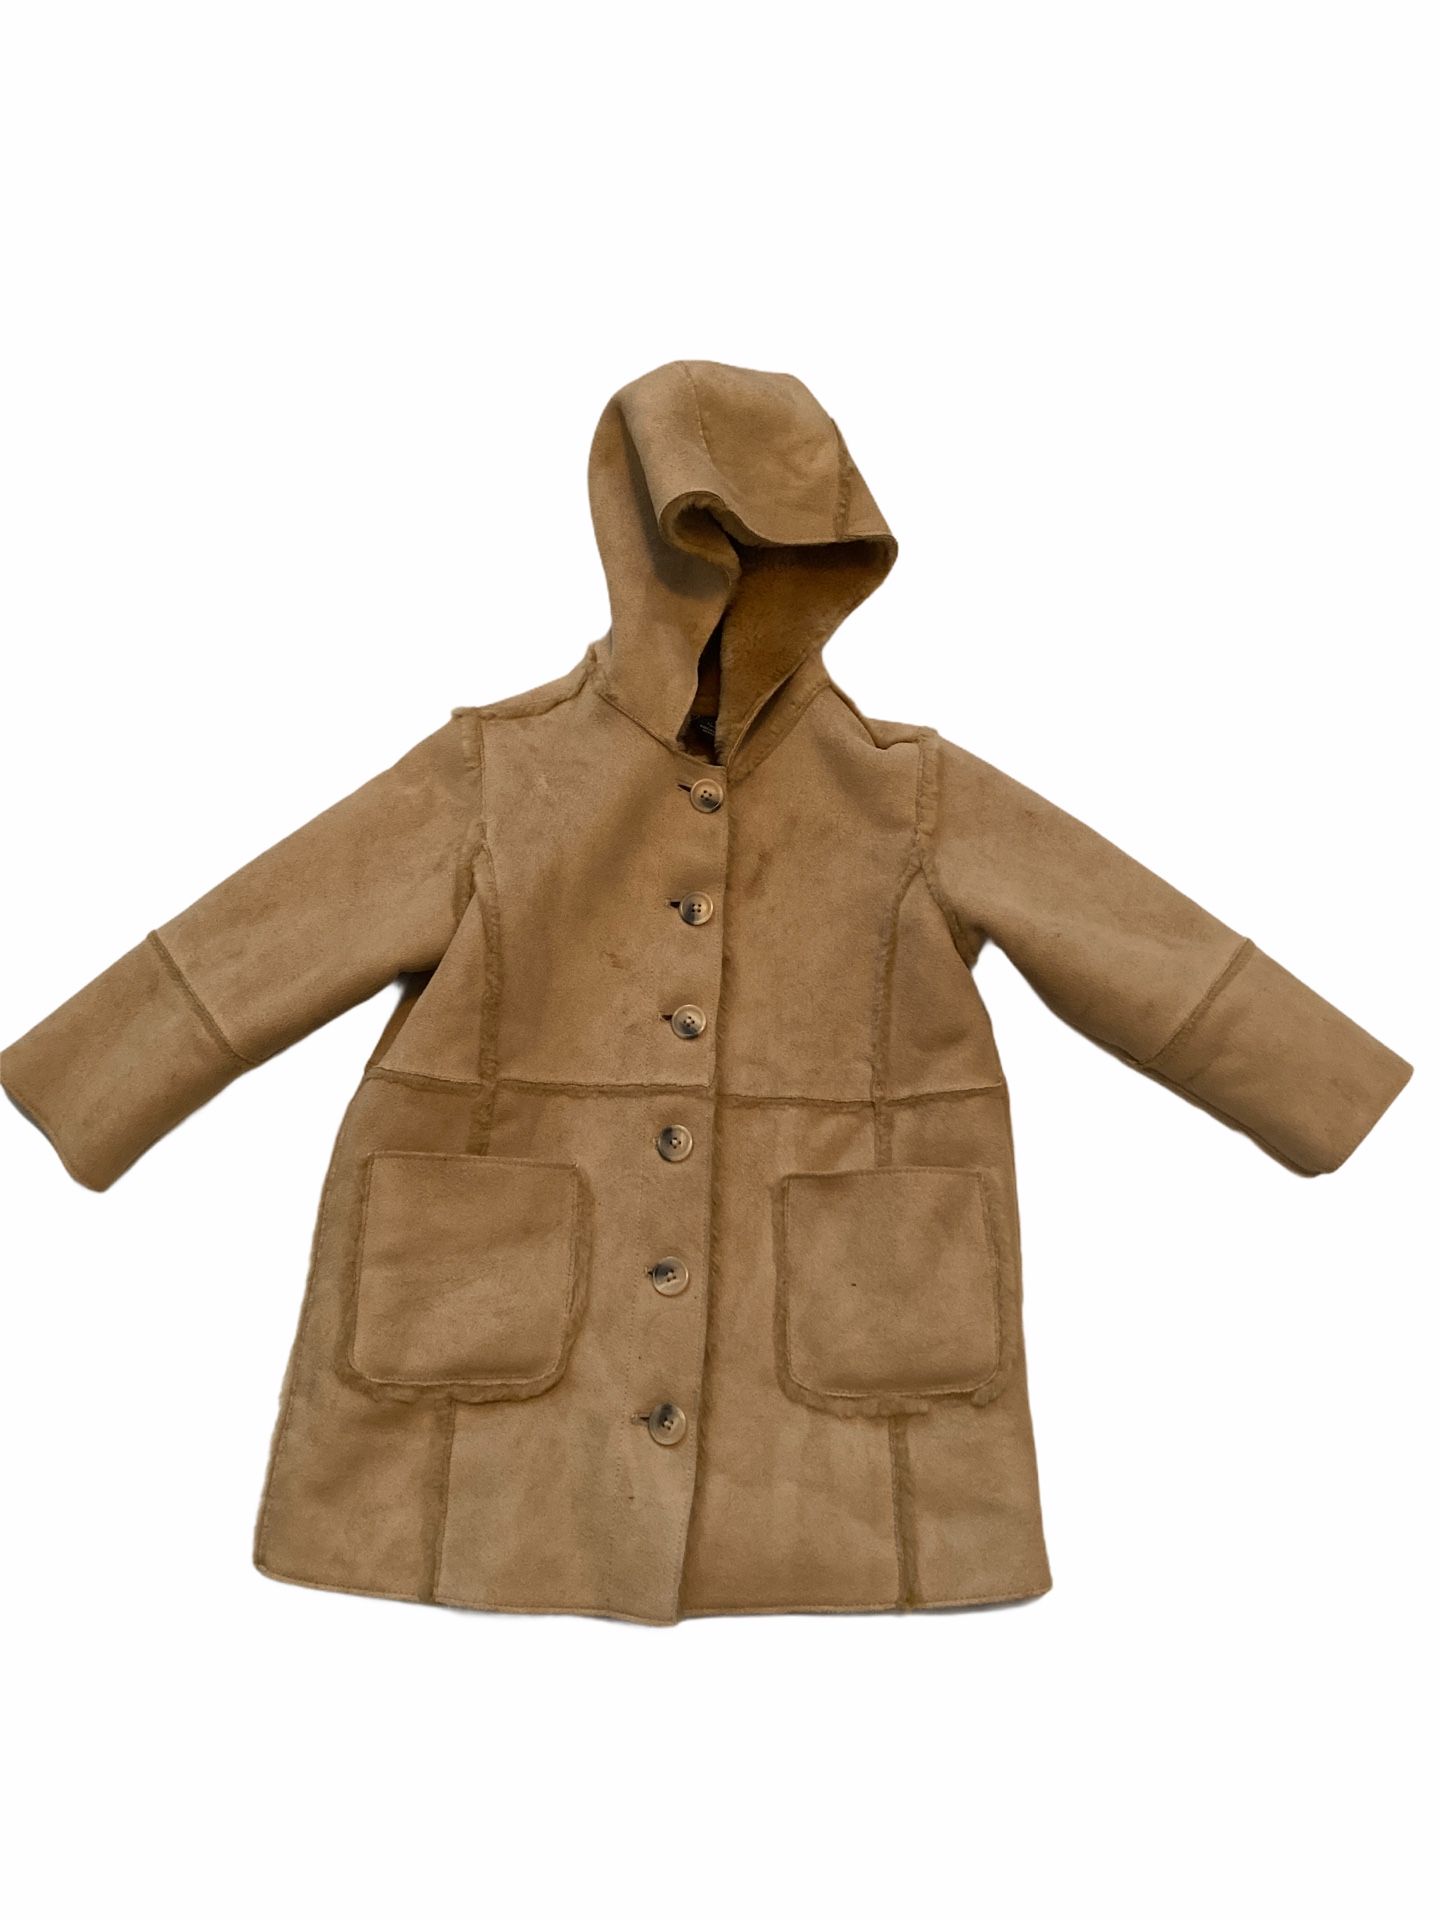 Baby Gap Toddler Girls Winter Coat Size 3T Tan Faux Suede Winter Coat